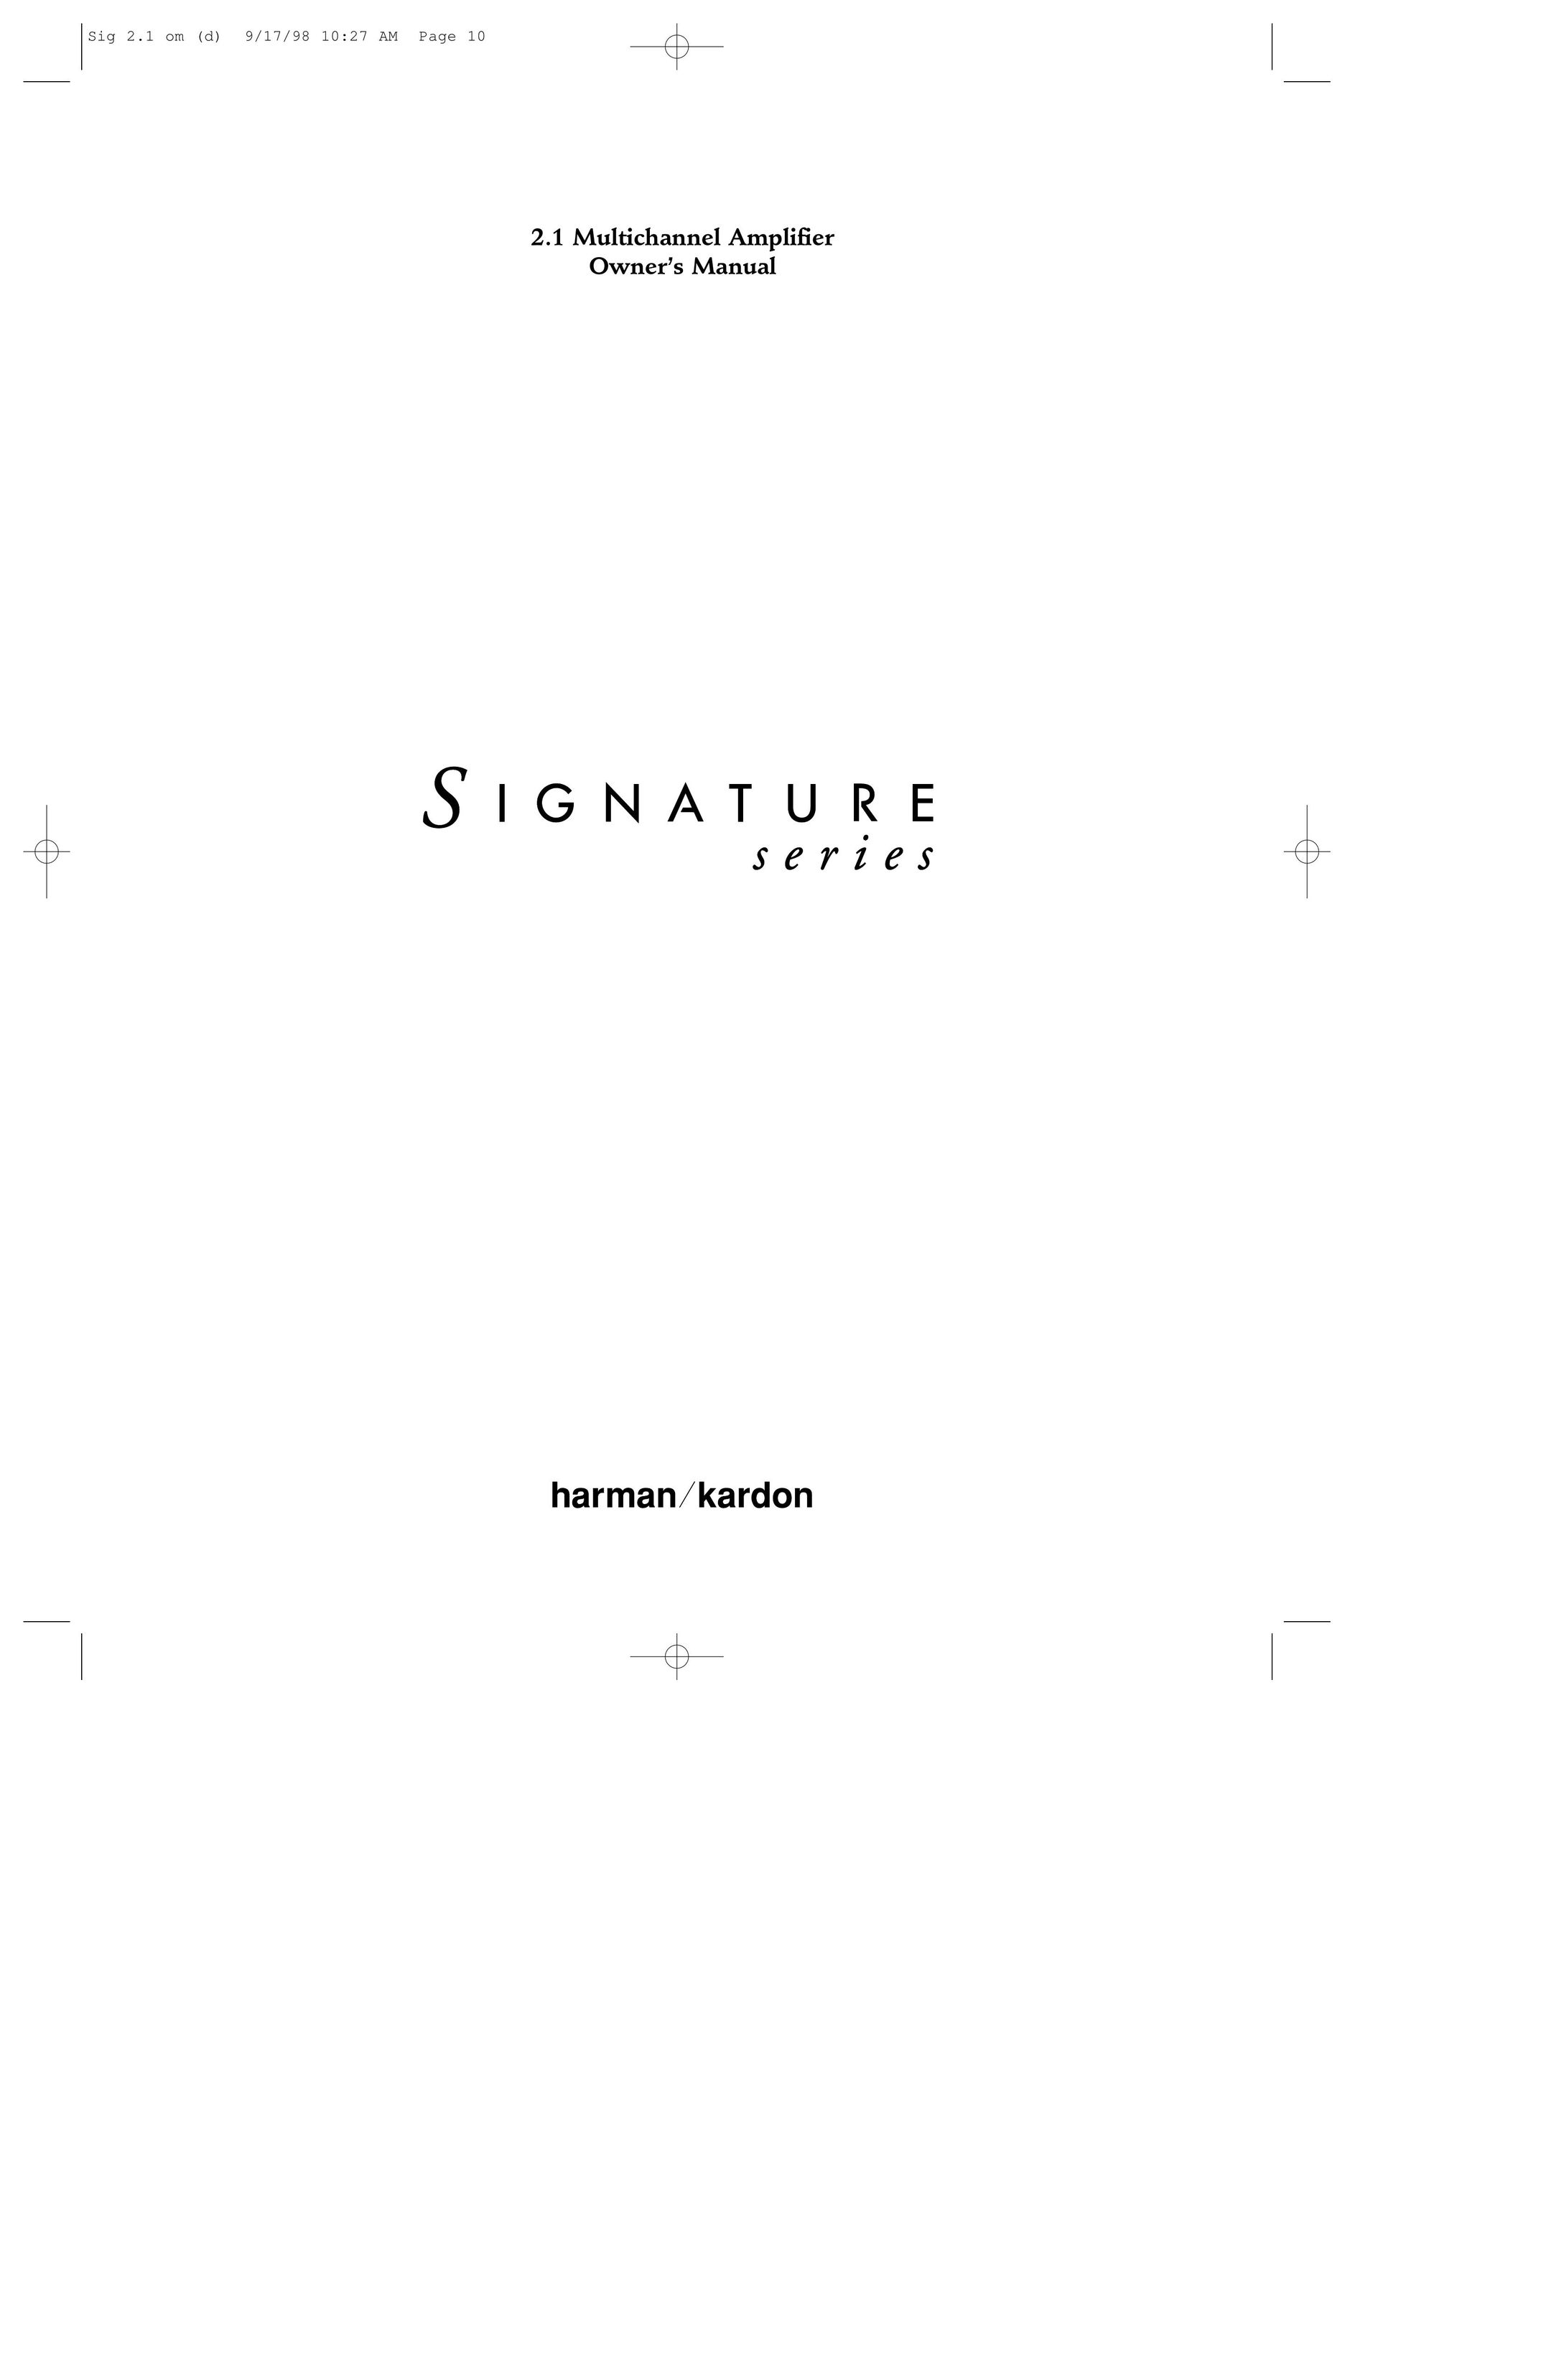 Harman-Kardon Signature Series Stereo Amplifier User Manual